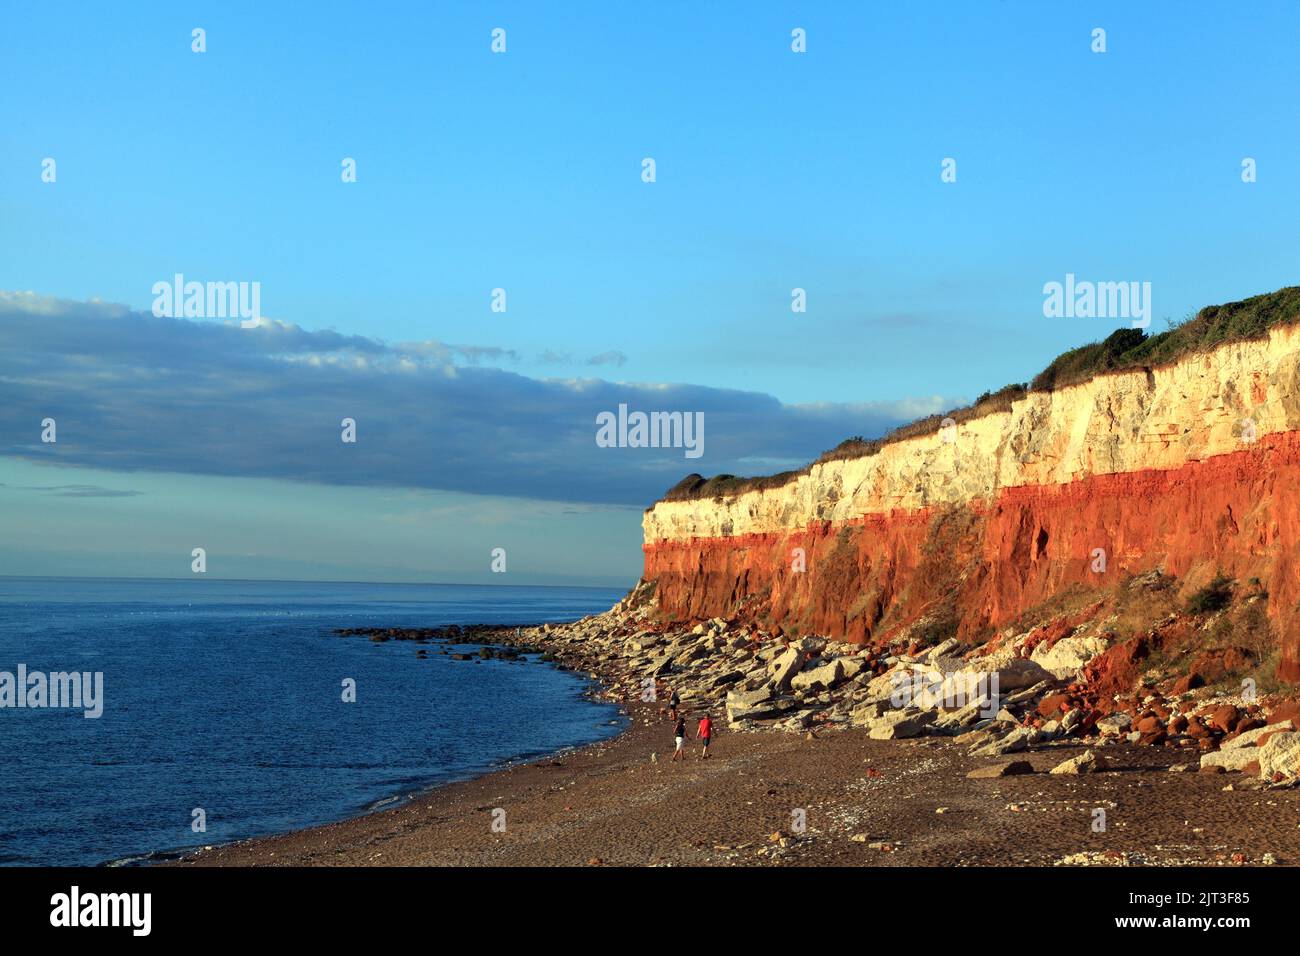 Old Hunstanton, striped cliffs, beach, North Sea, Norfolk, England, UK Stock Photo